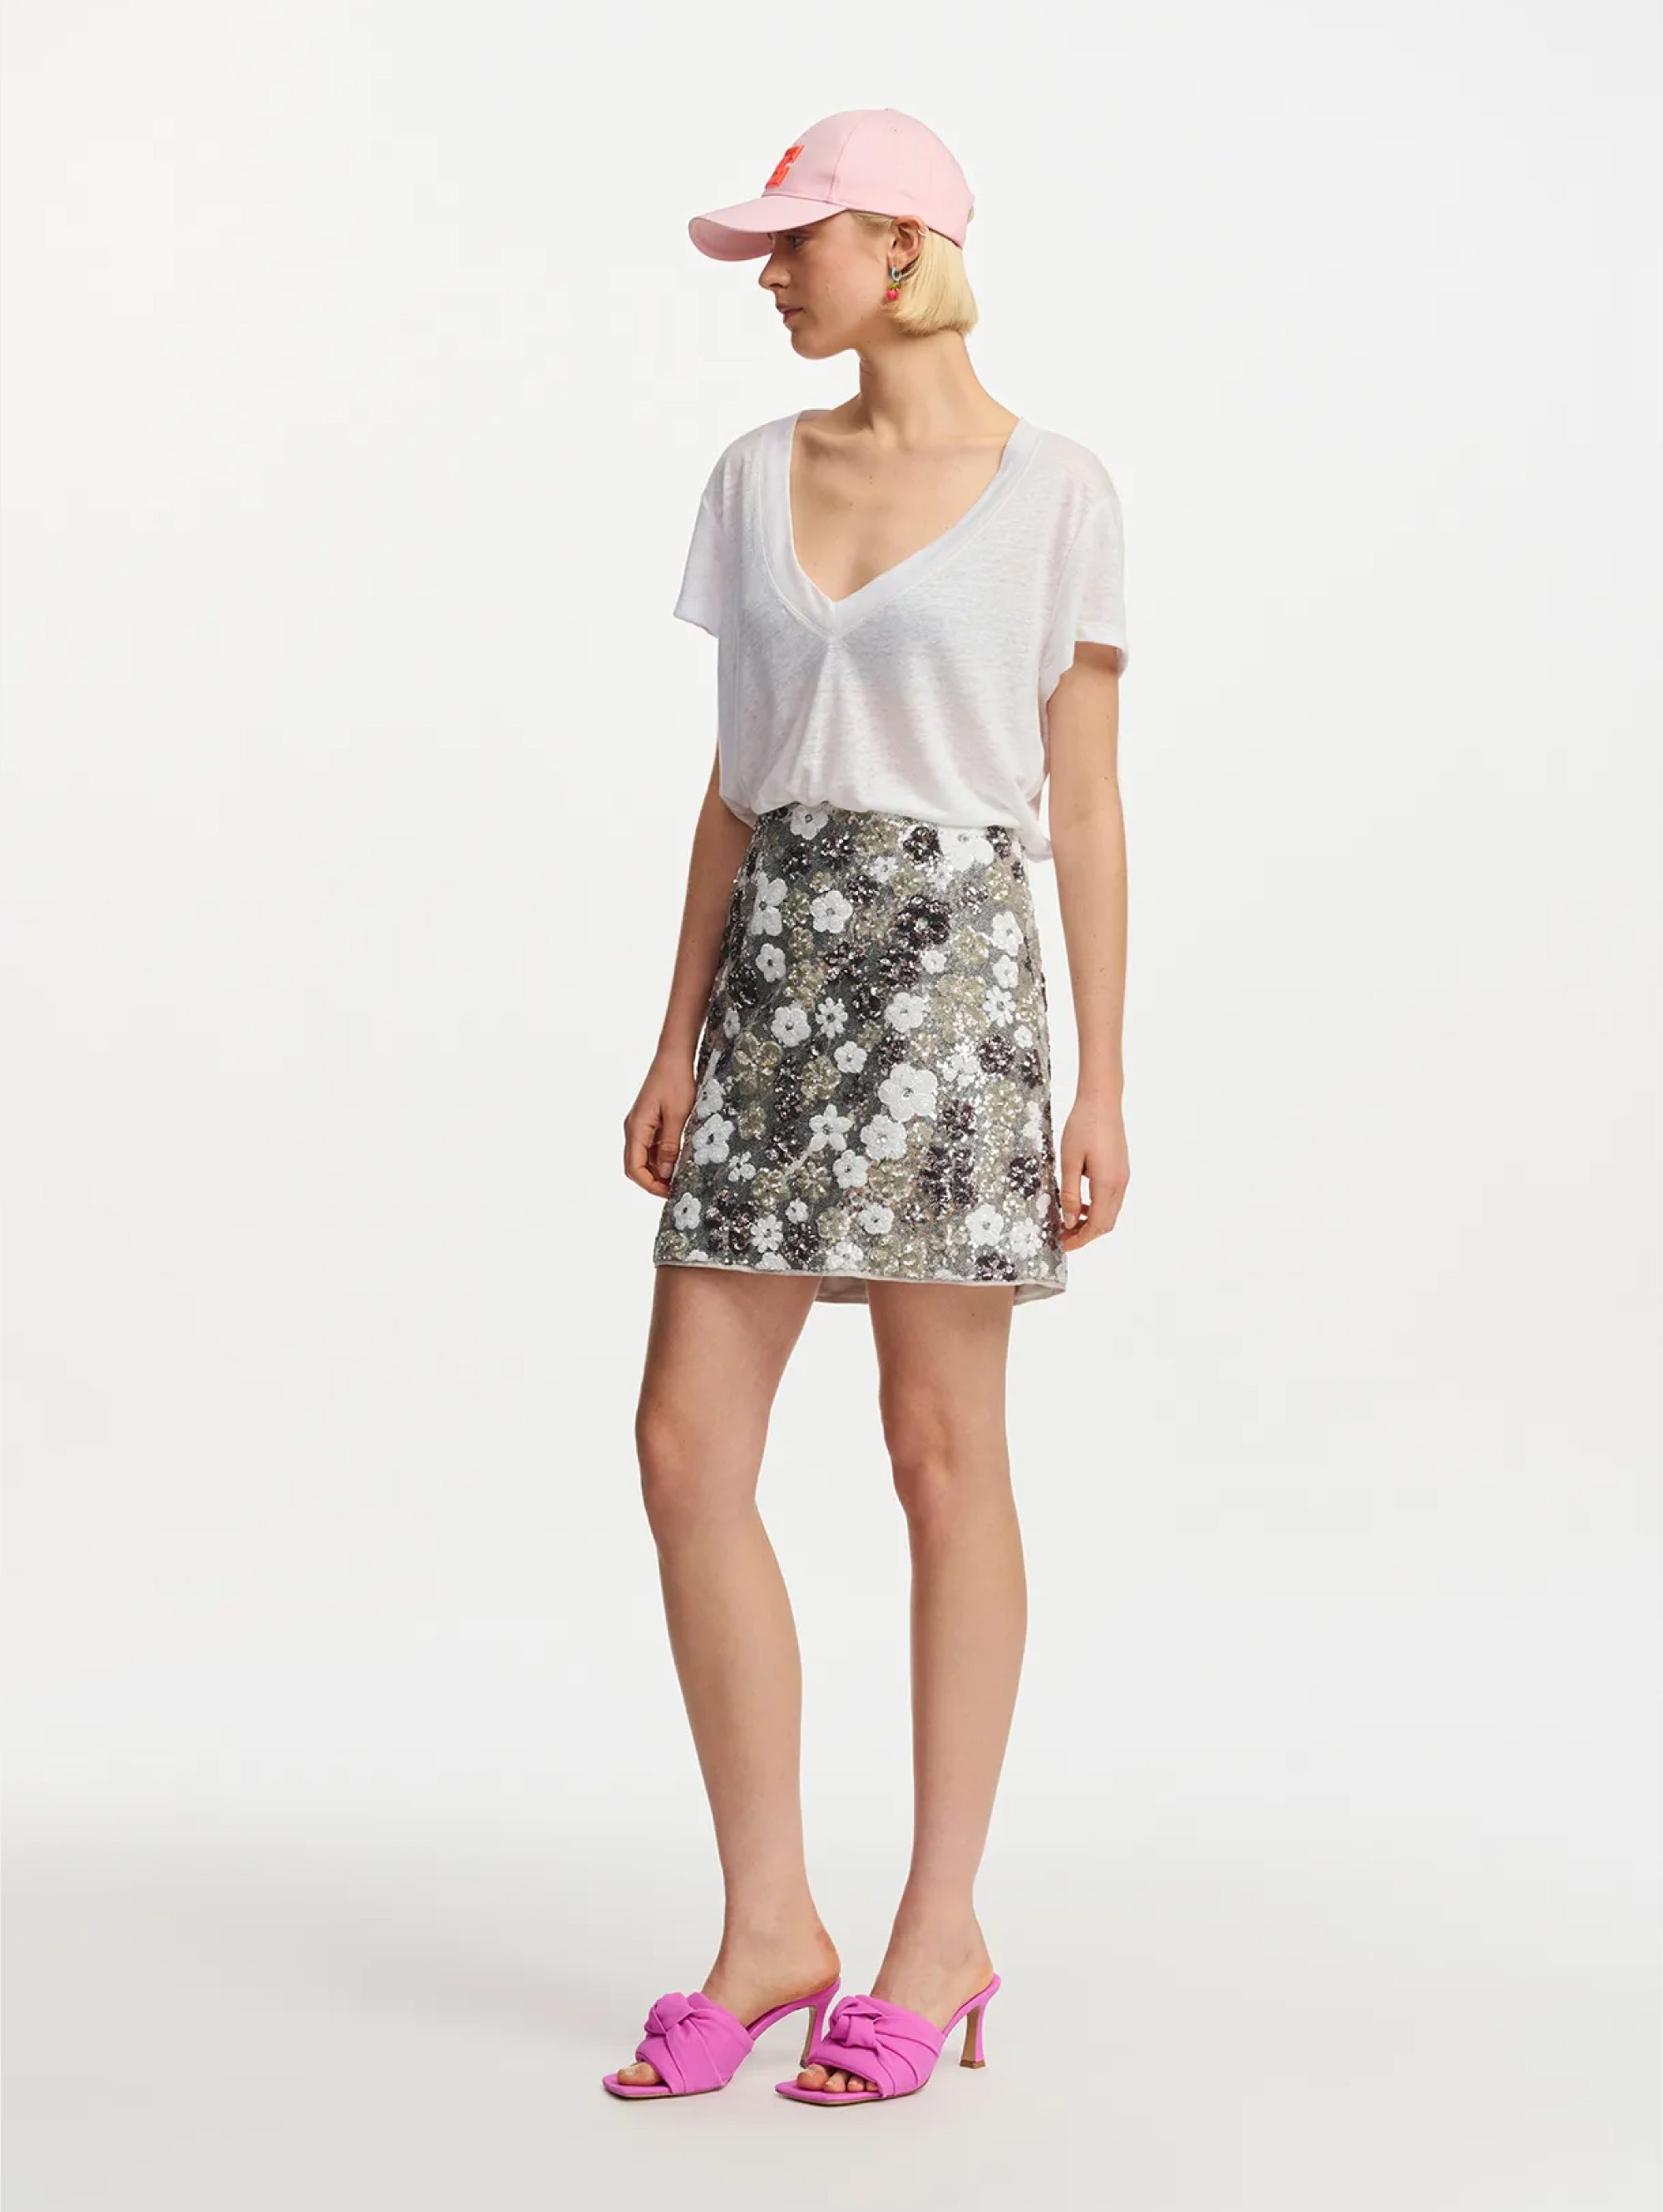 Miniskirt in Silver Sequins